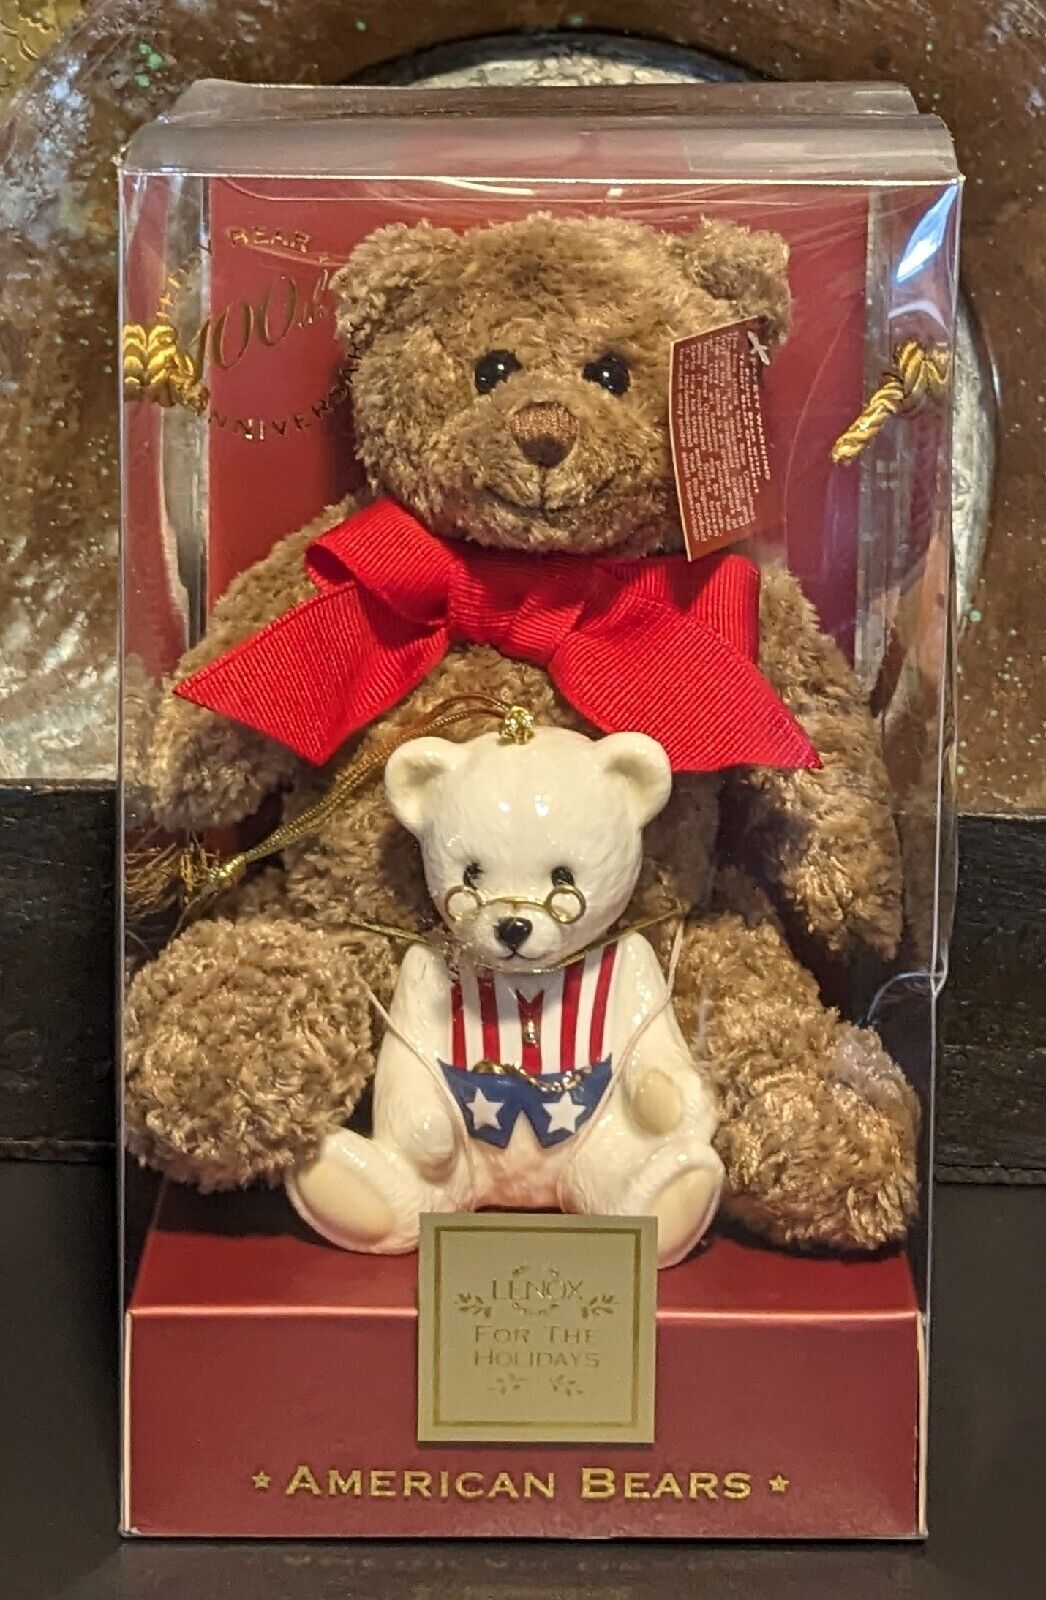 Lenox American Bears Teddy Bear 100th Anniversary Limited Edition - New in Box